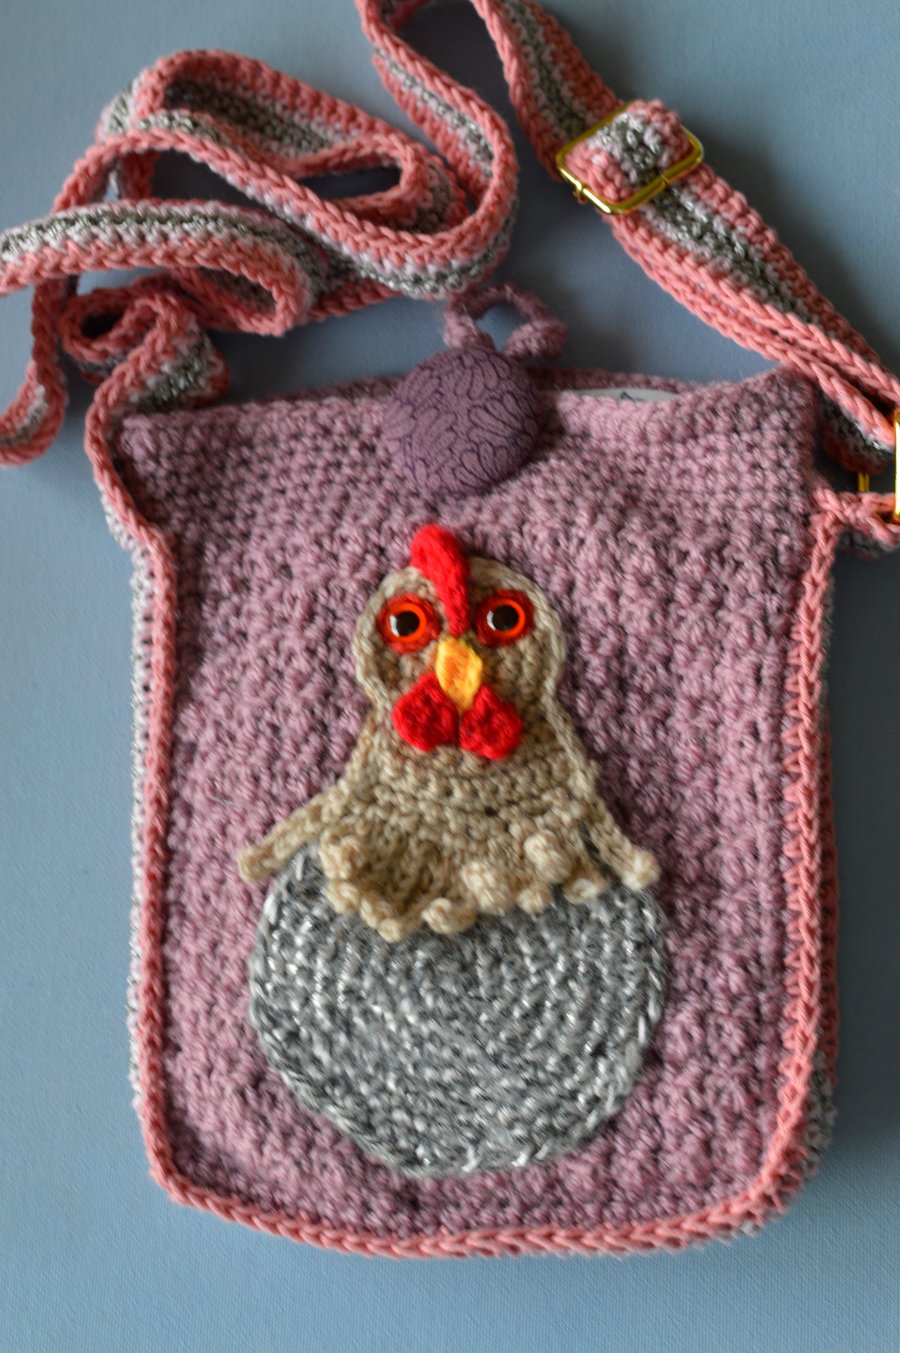 Crochet Bag with Chicken motif